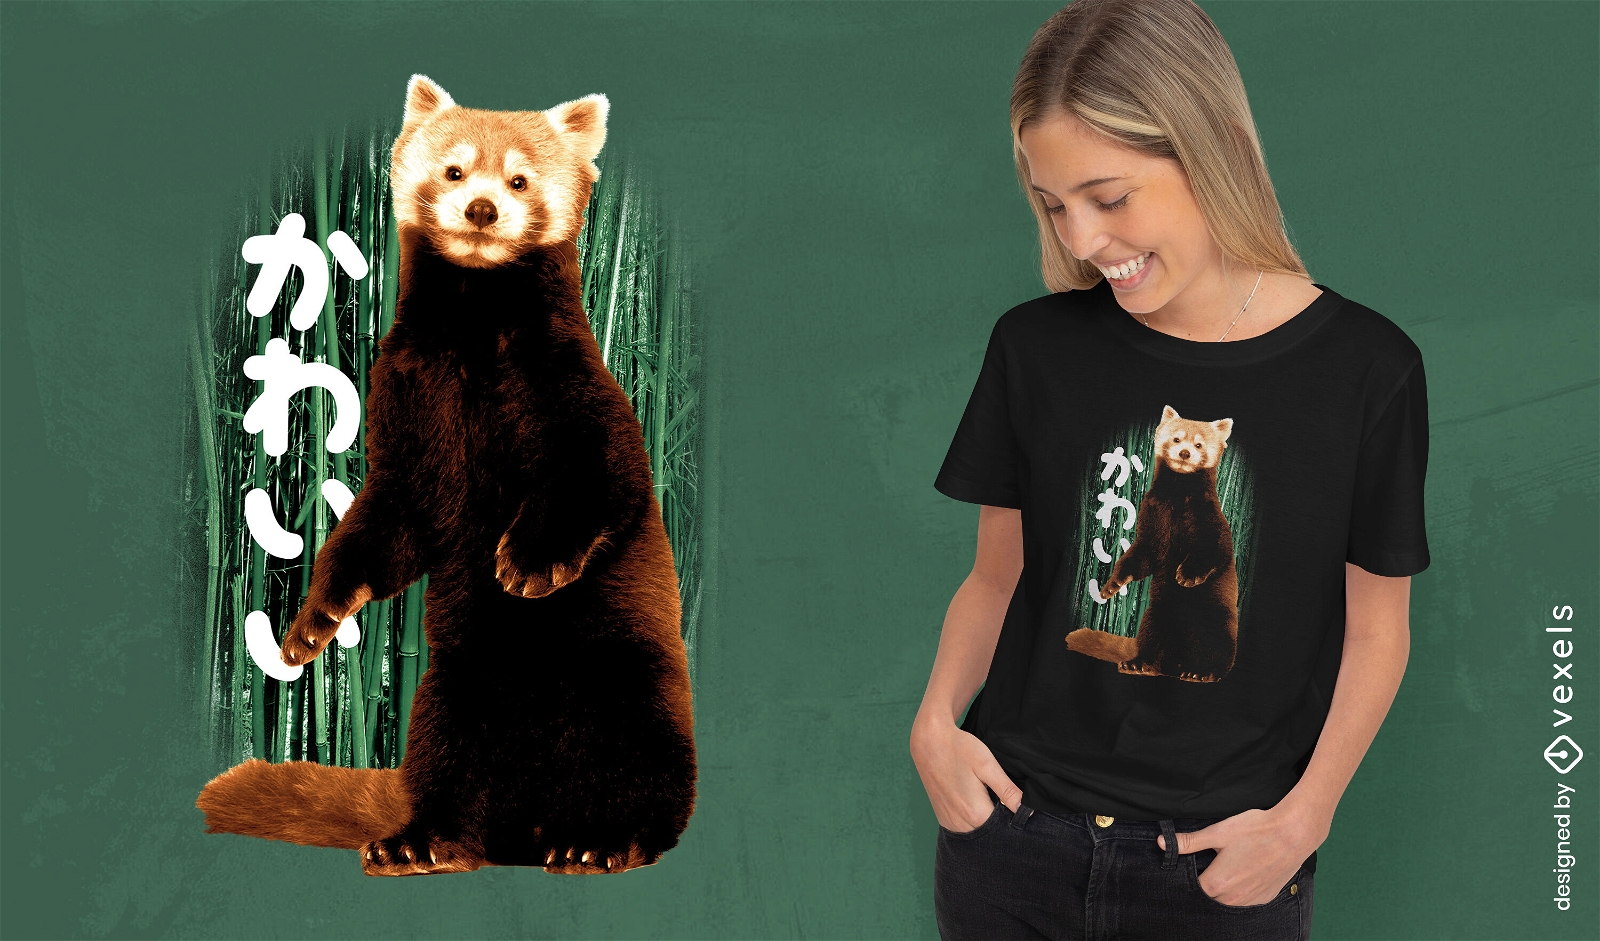 Red panda animal cute t-shirt psd